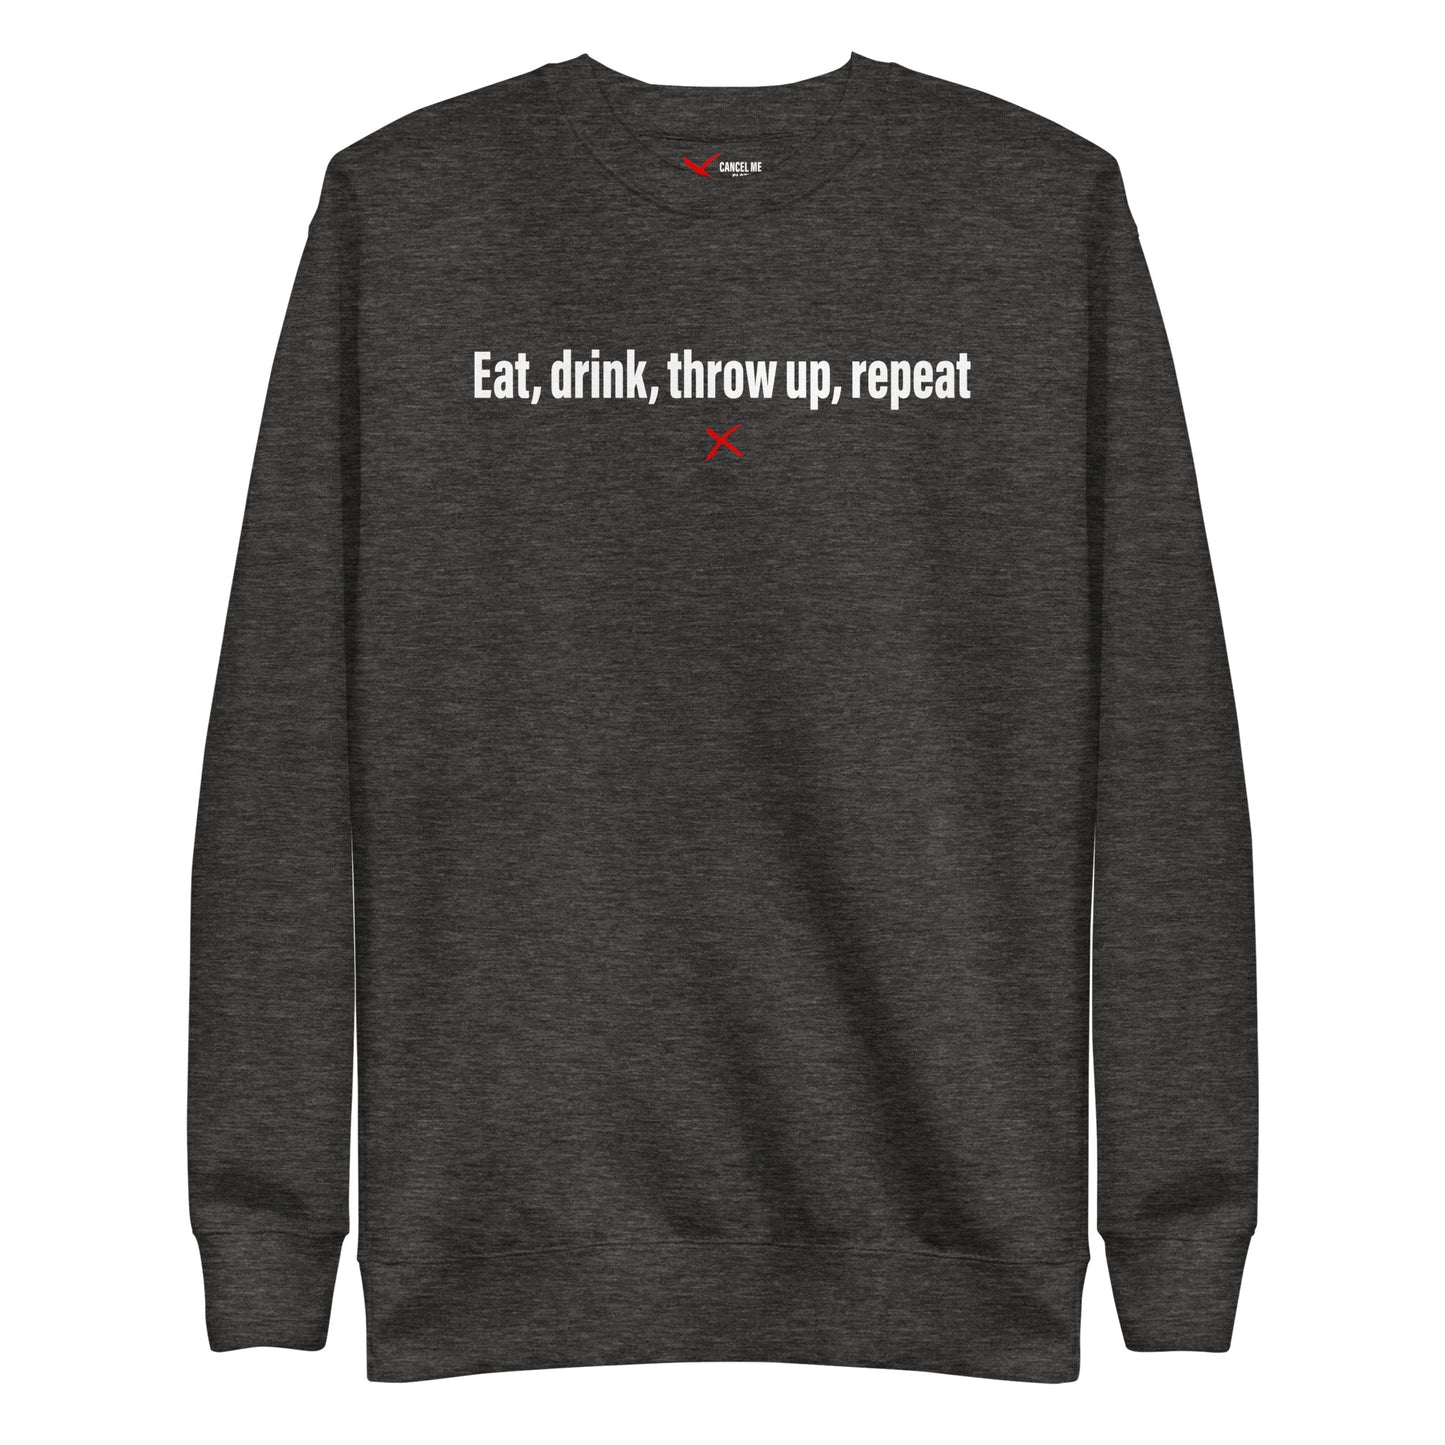 Eat, drink, throw up, repeat - Sweatshirt